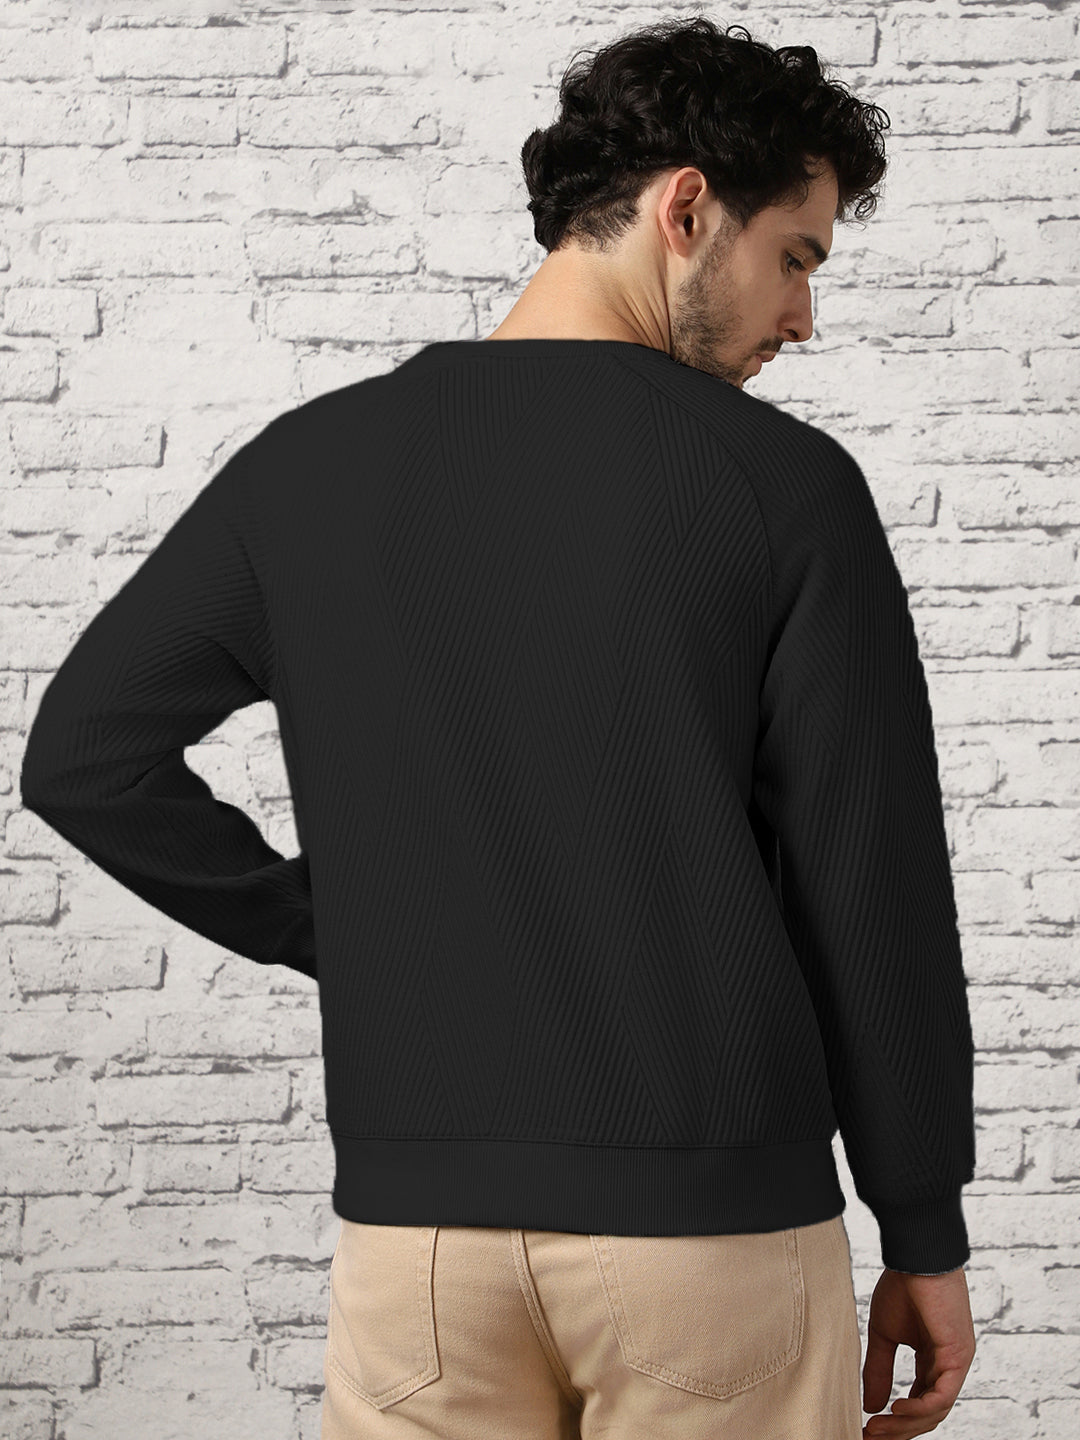 Black Zigzag Quilted Sweatshirt